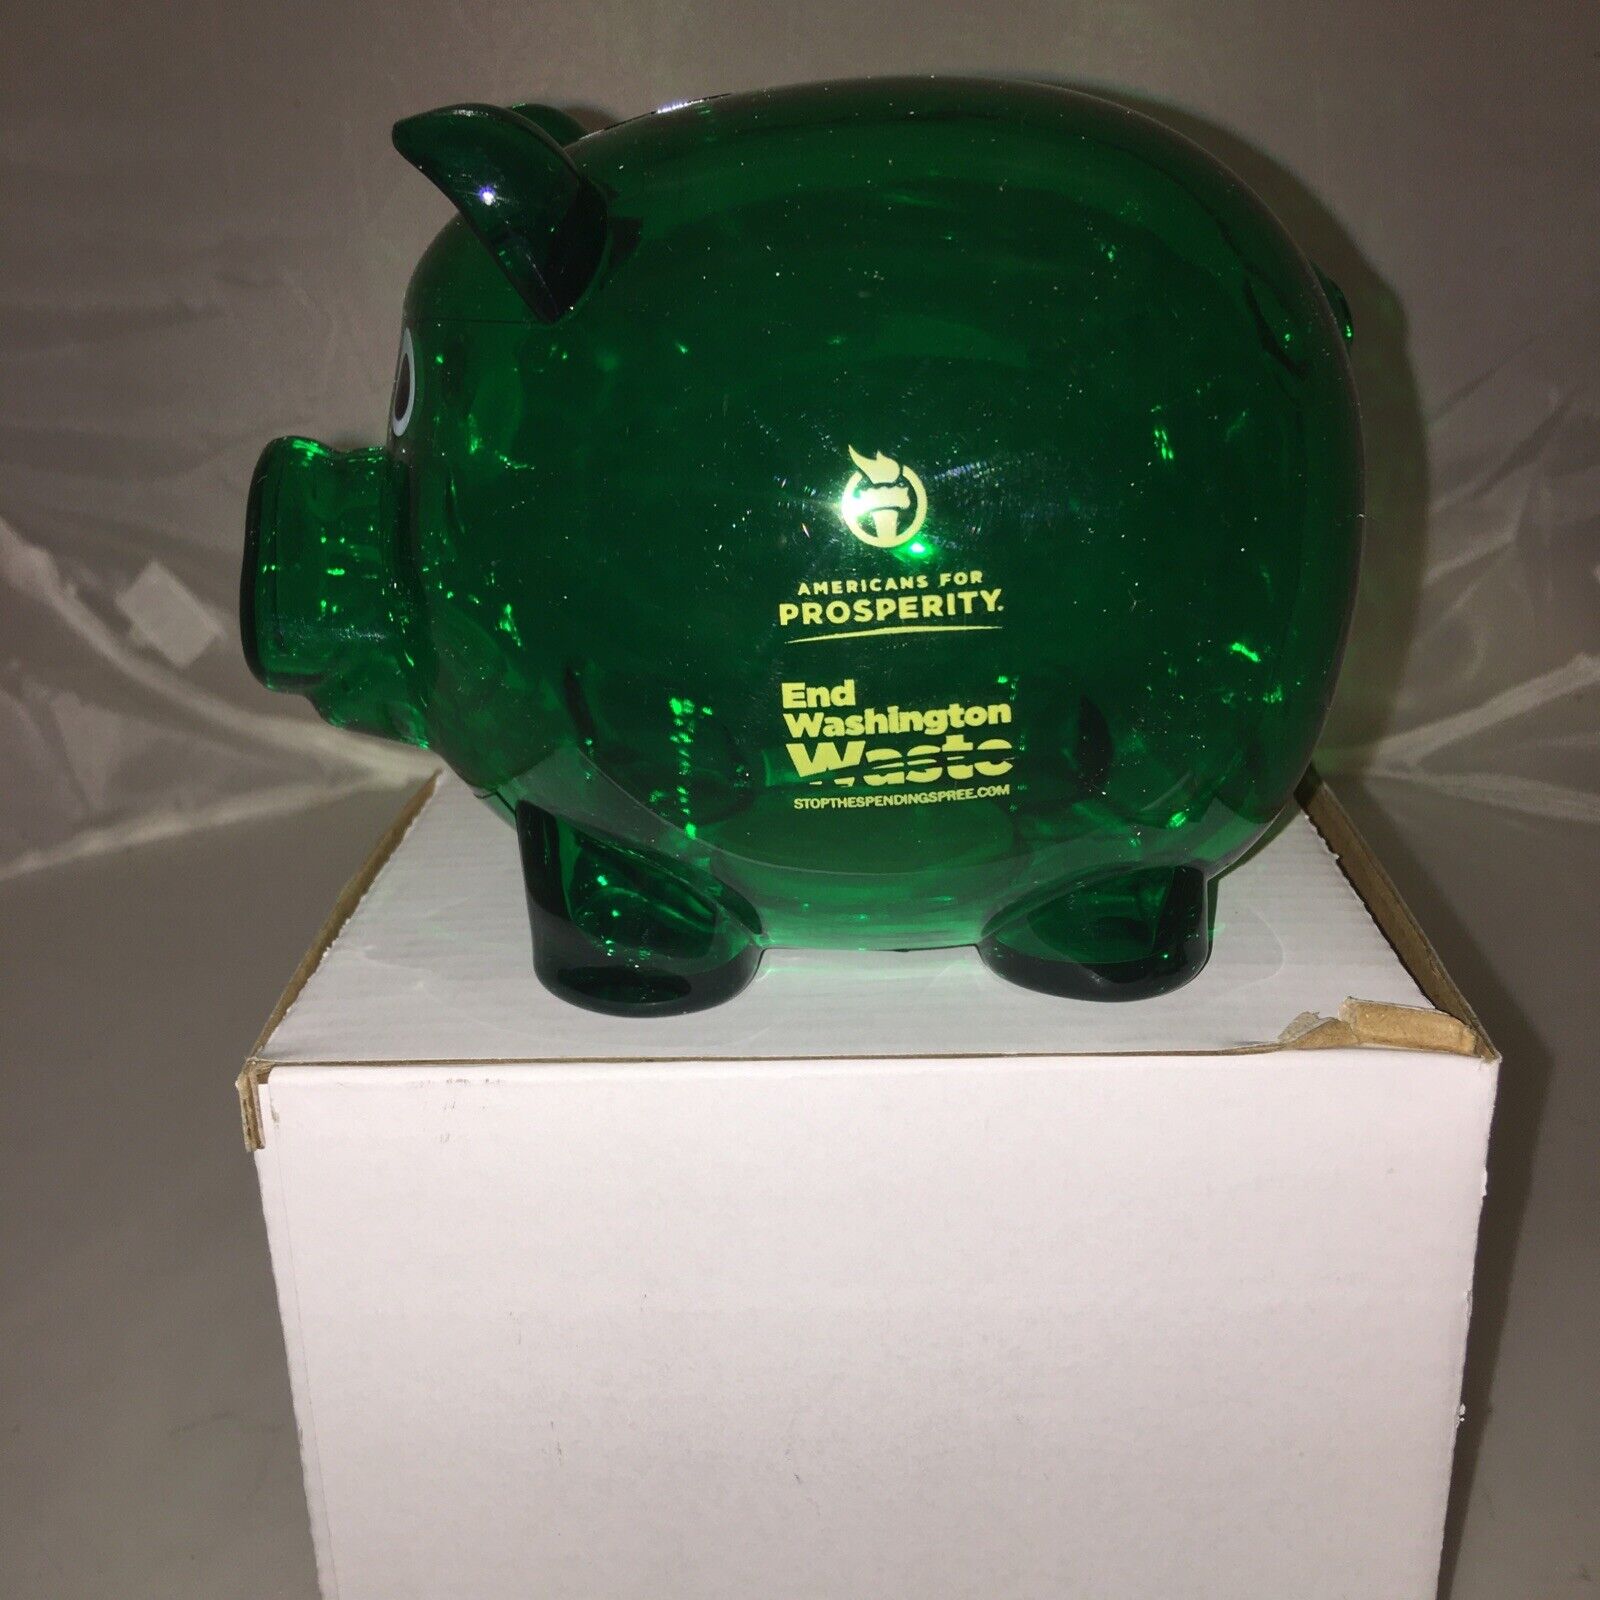 Americans For Prosperity Green Plastic Piggy Bank - End Washington Waste